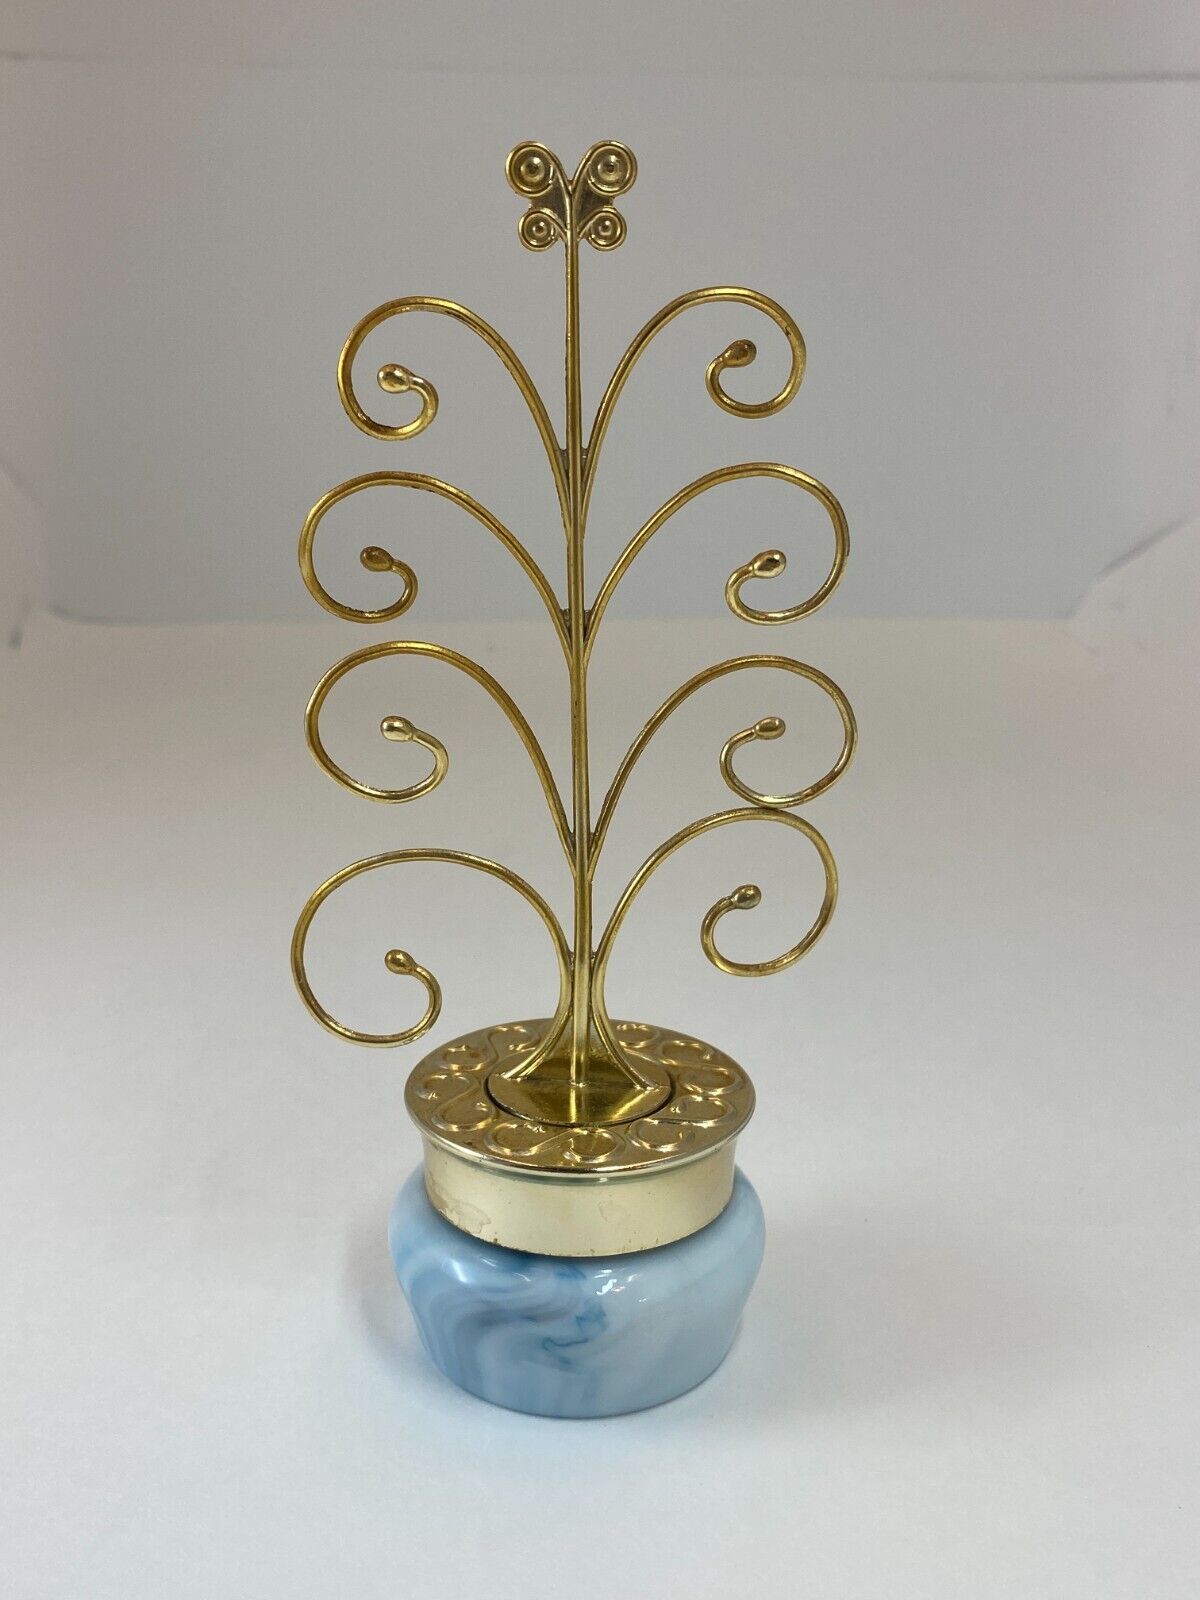 Vintage Avon Powder Sachet Blue Jar With Gold Topper - No Reserve